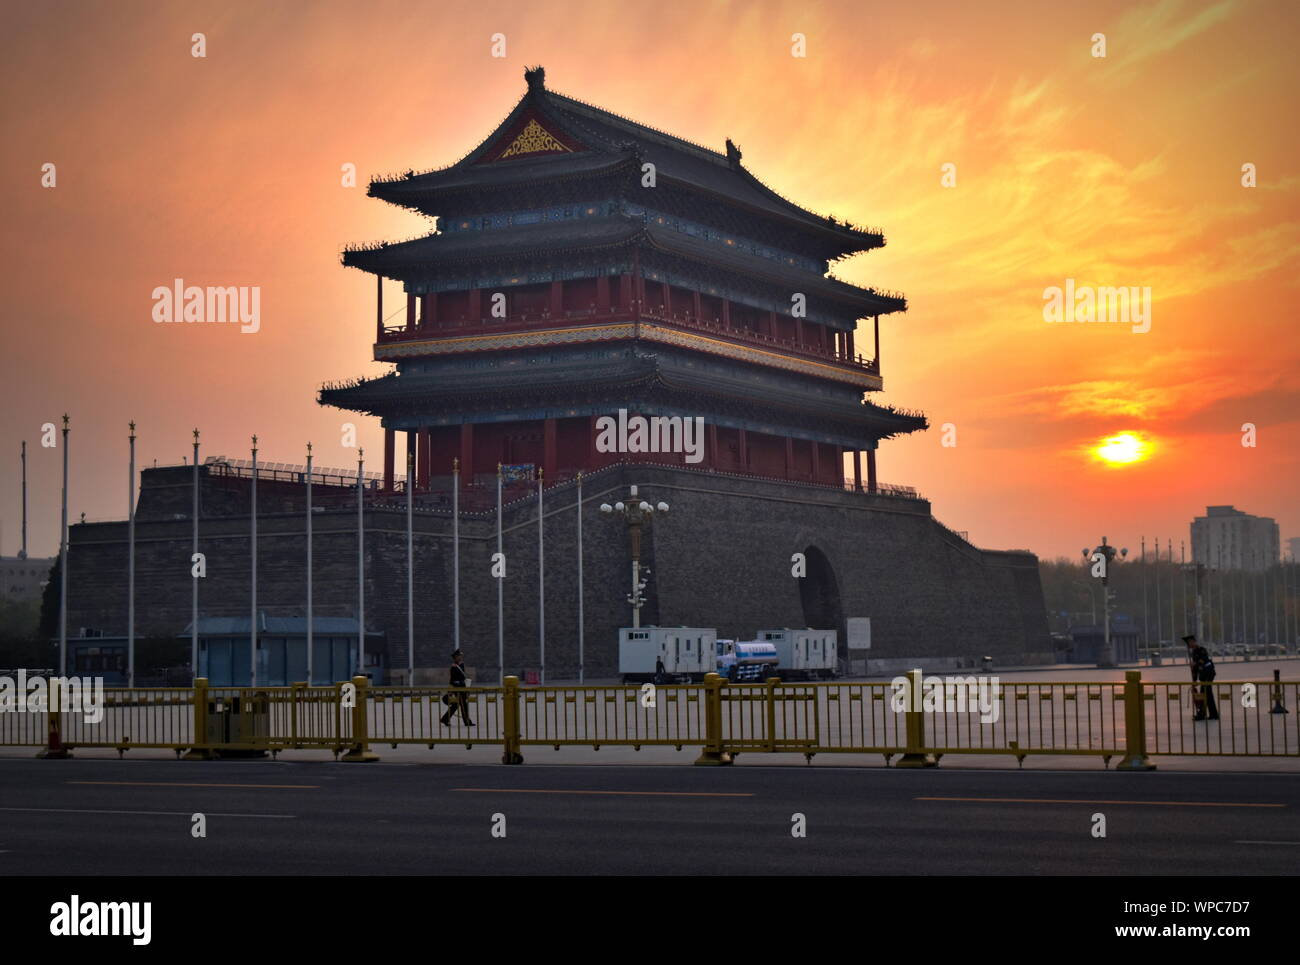 Tiananmen square 15th century Zhengyang gatehouse against dramatic sunset sky, Beijing, China Stock Photo